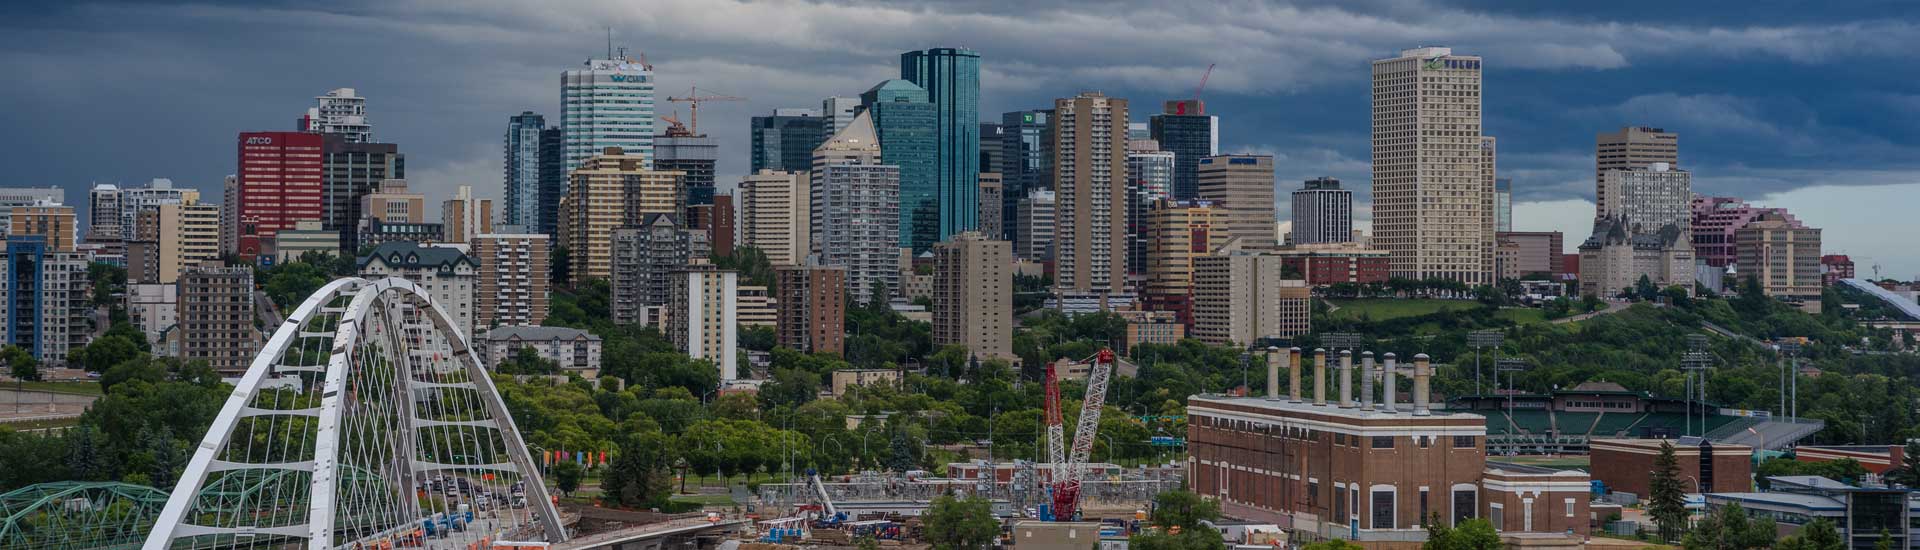 Edmonton Alberta Real Estate Appraisers Home Page Banner